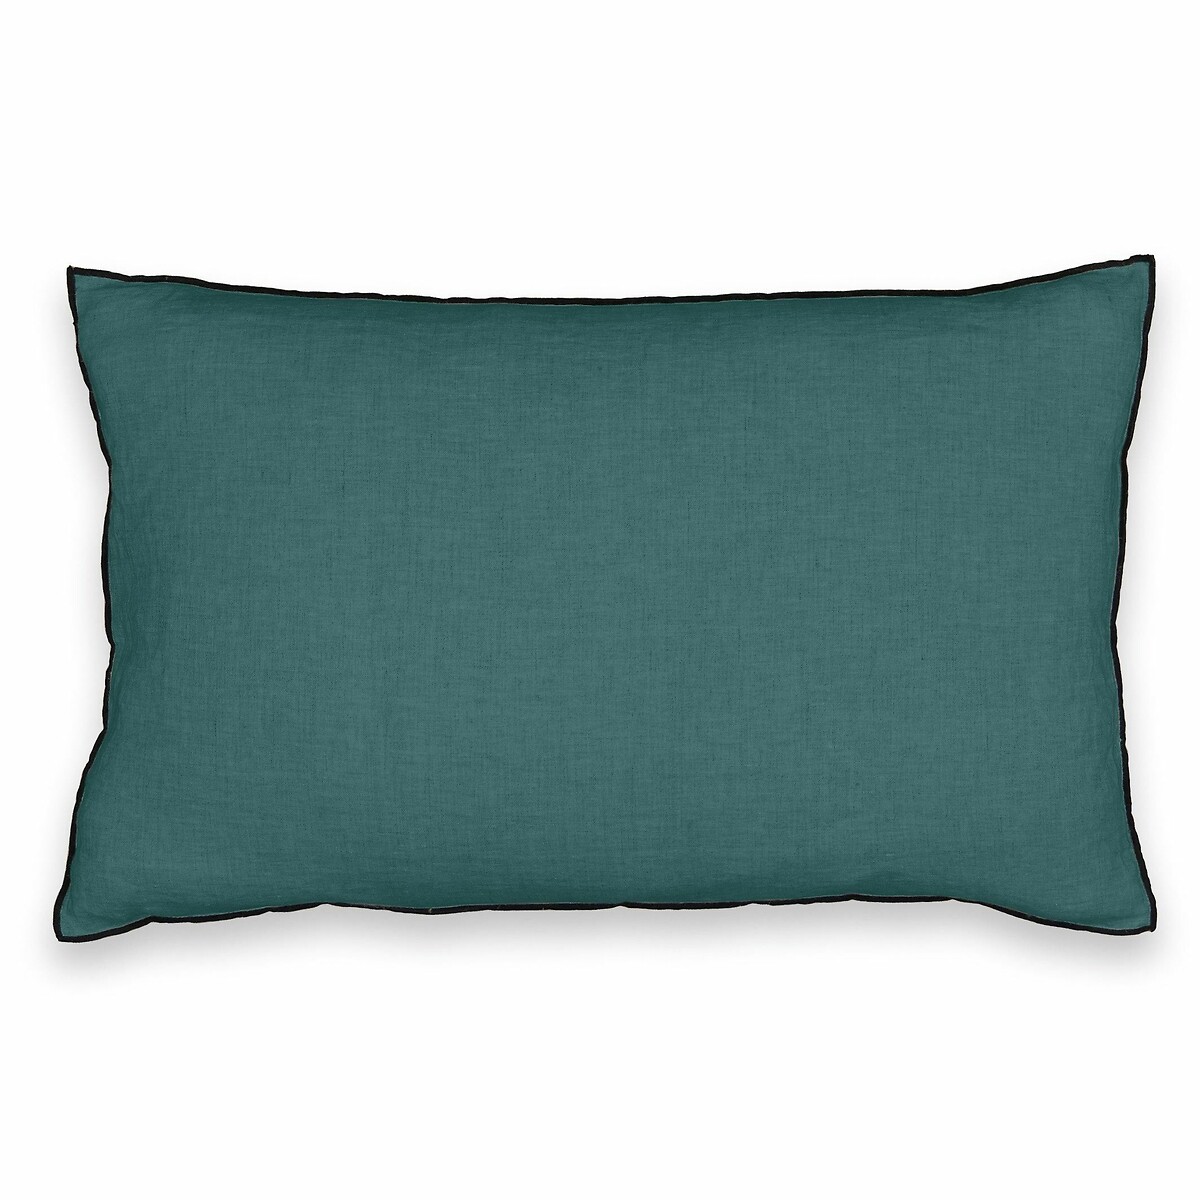 Чехол AM.PM На подушку 100 стираный лен ELina 50 x 50 см зеленый, размер 50 x 50 см - фото 3